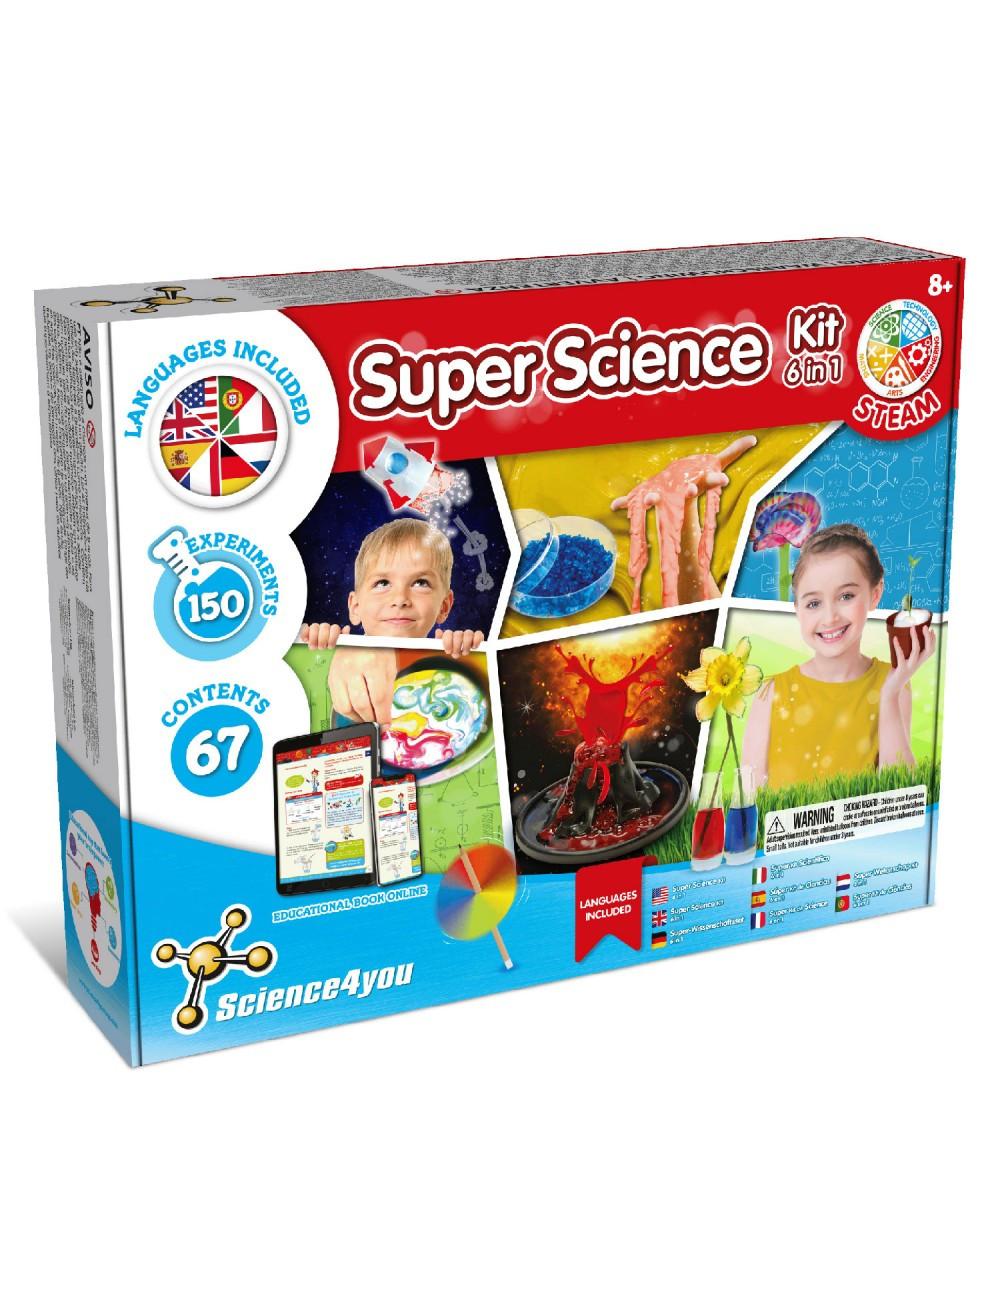 SCIENCE4YOU  Super Science Kit 6in1 